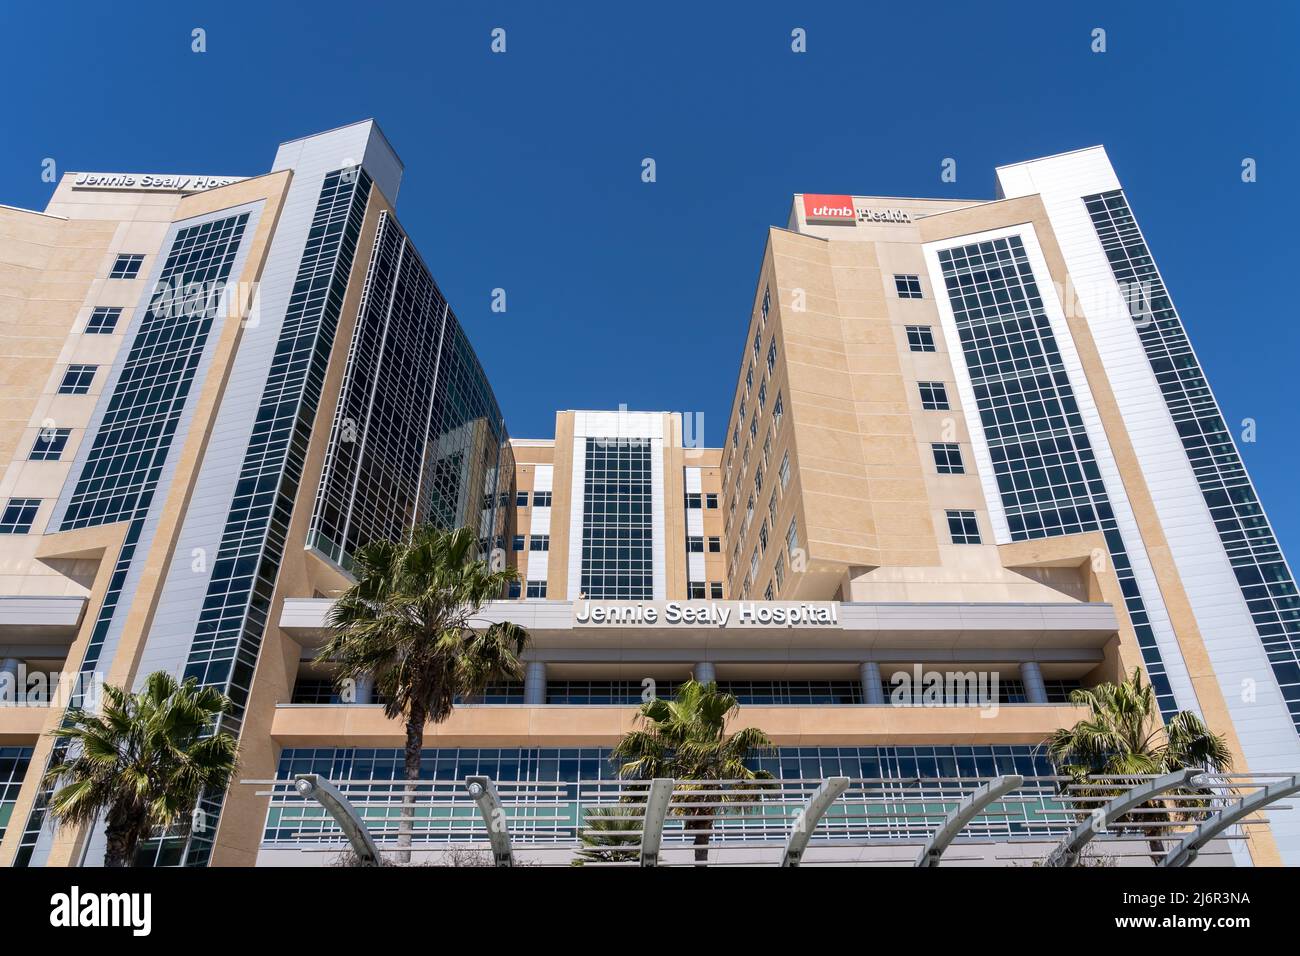 Galveston,  Texas, USA - March 12, 2022: Jennie Sealy Hospital in Galveston, Texas, USA on March 12, 2022 Stock Photo